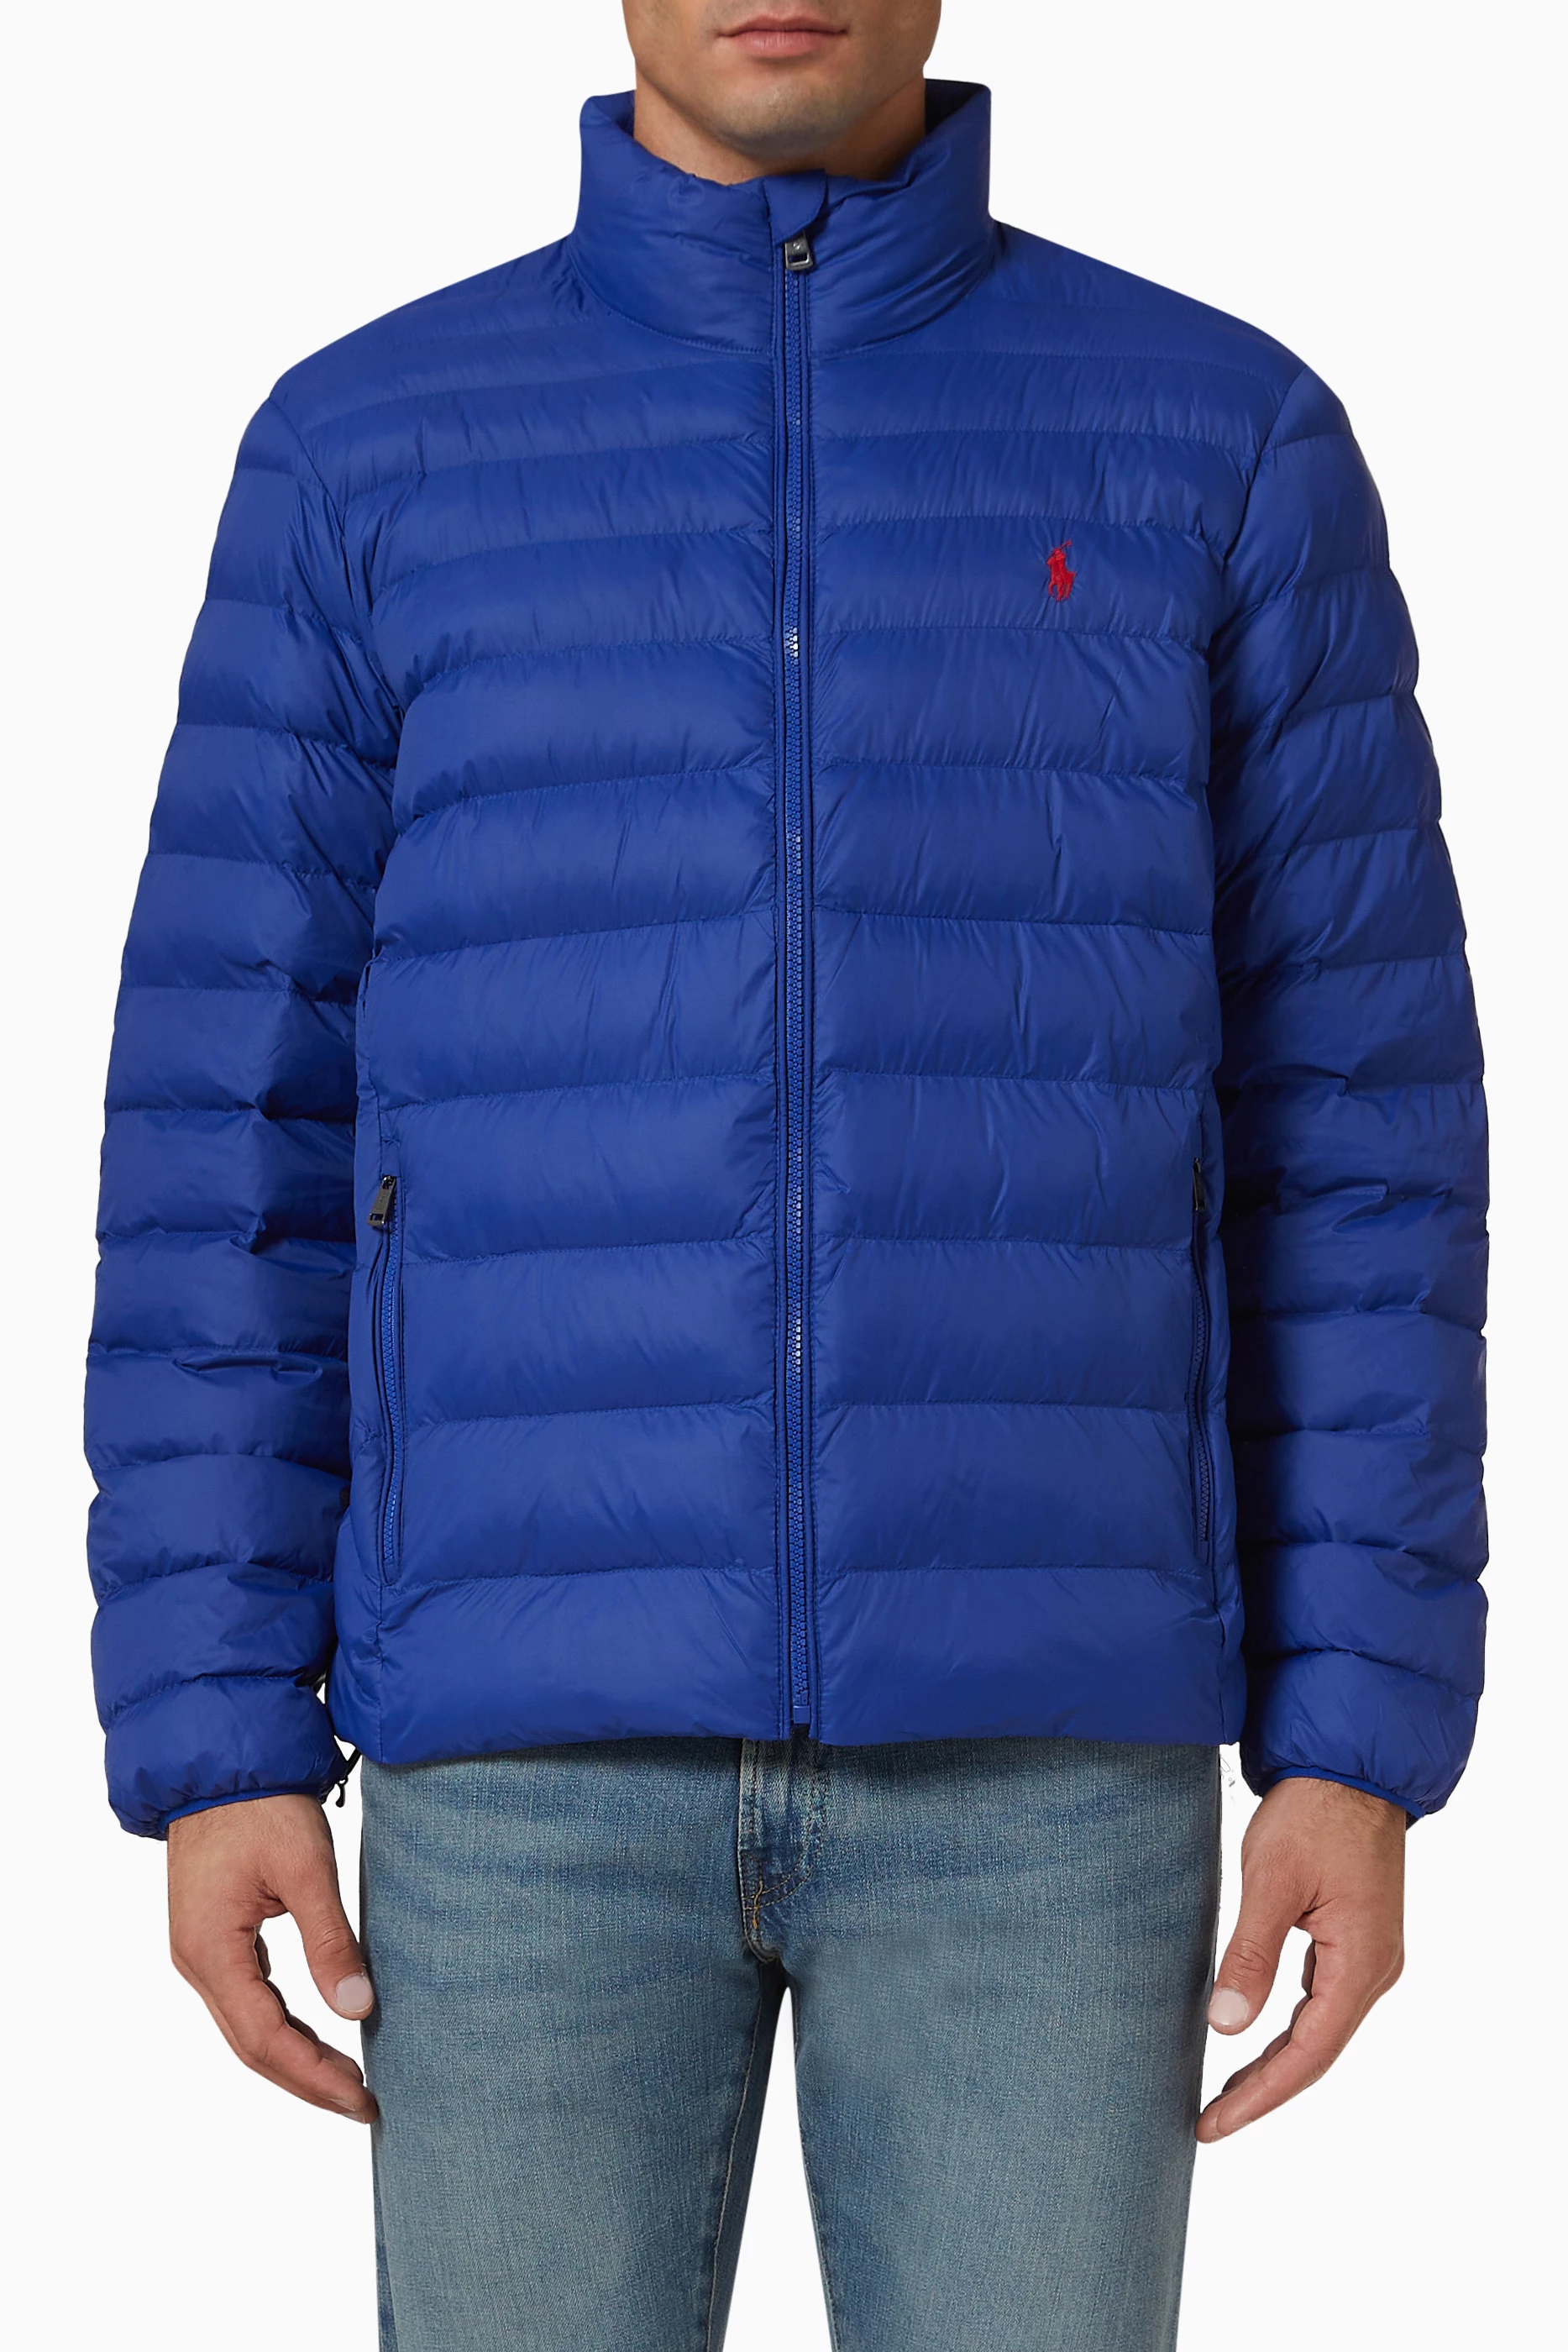 Shop Polo Ralph Lauren Blue Packable Jacket in Recycled Nylon for MEN |  Ounass Kuwait